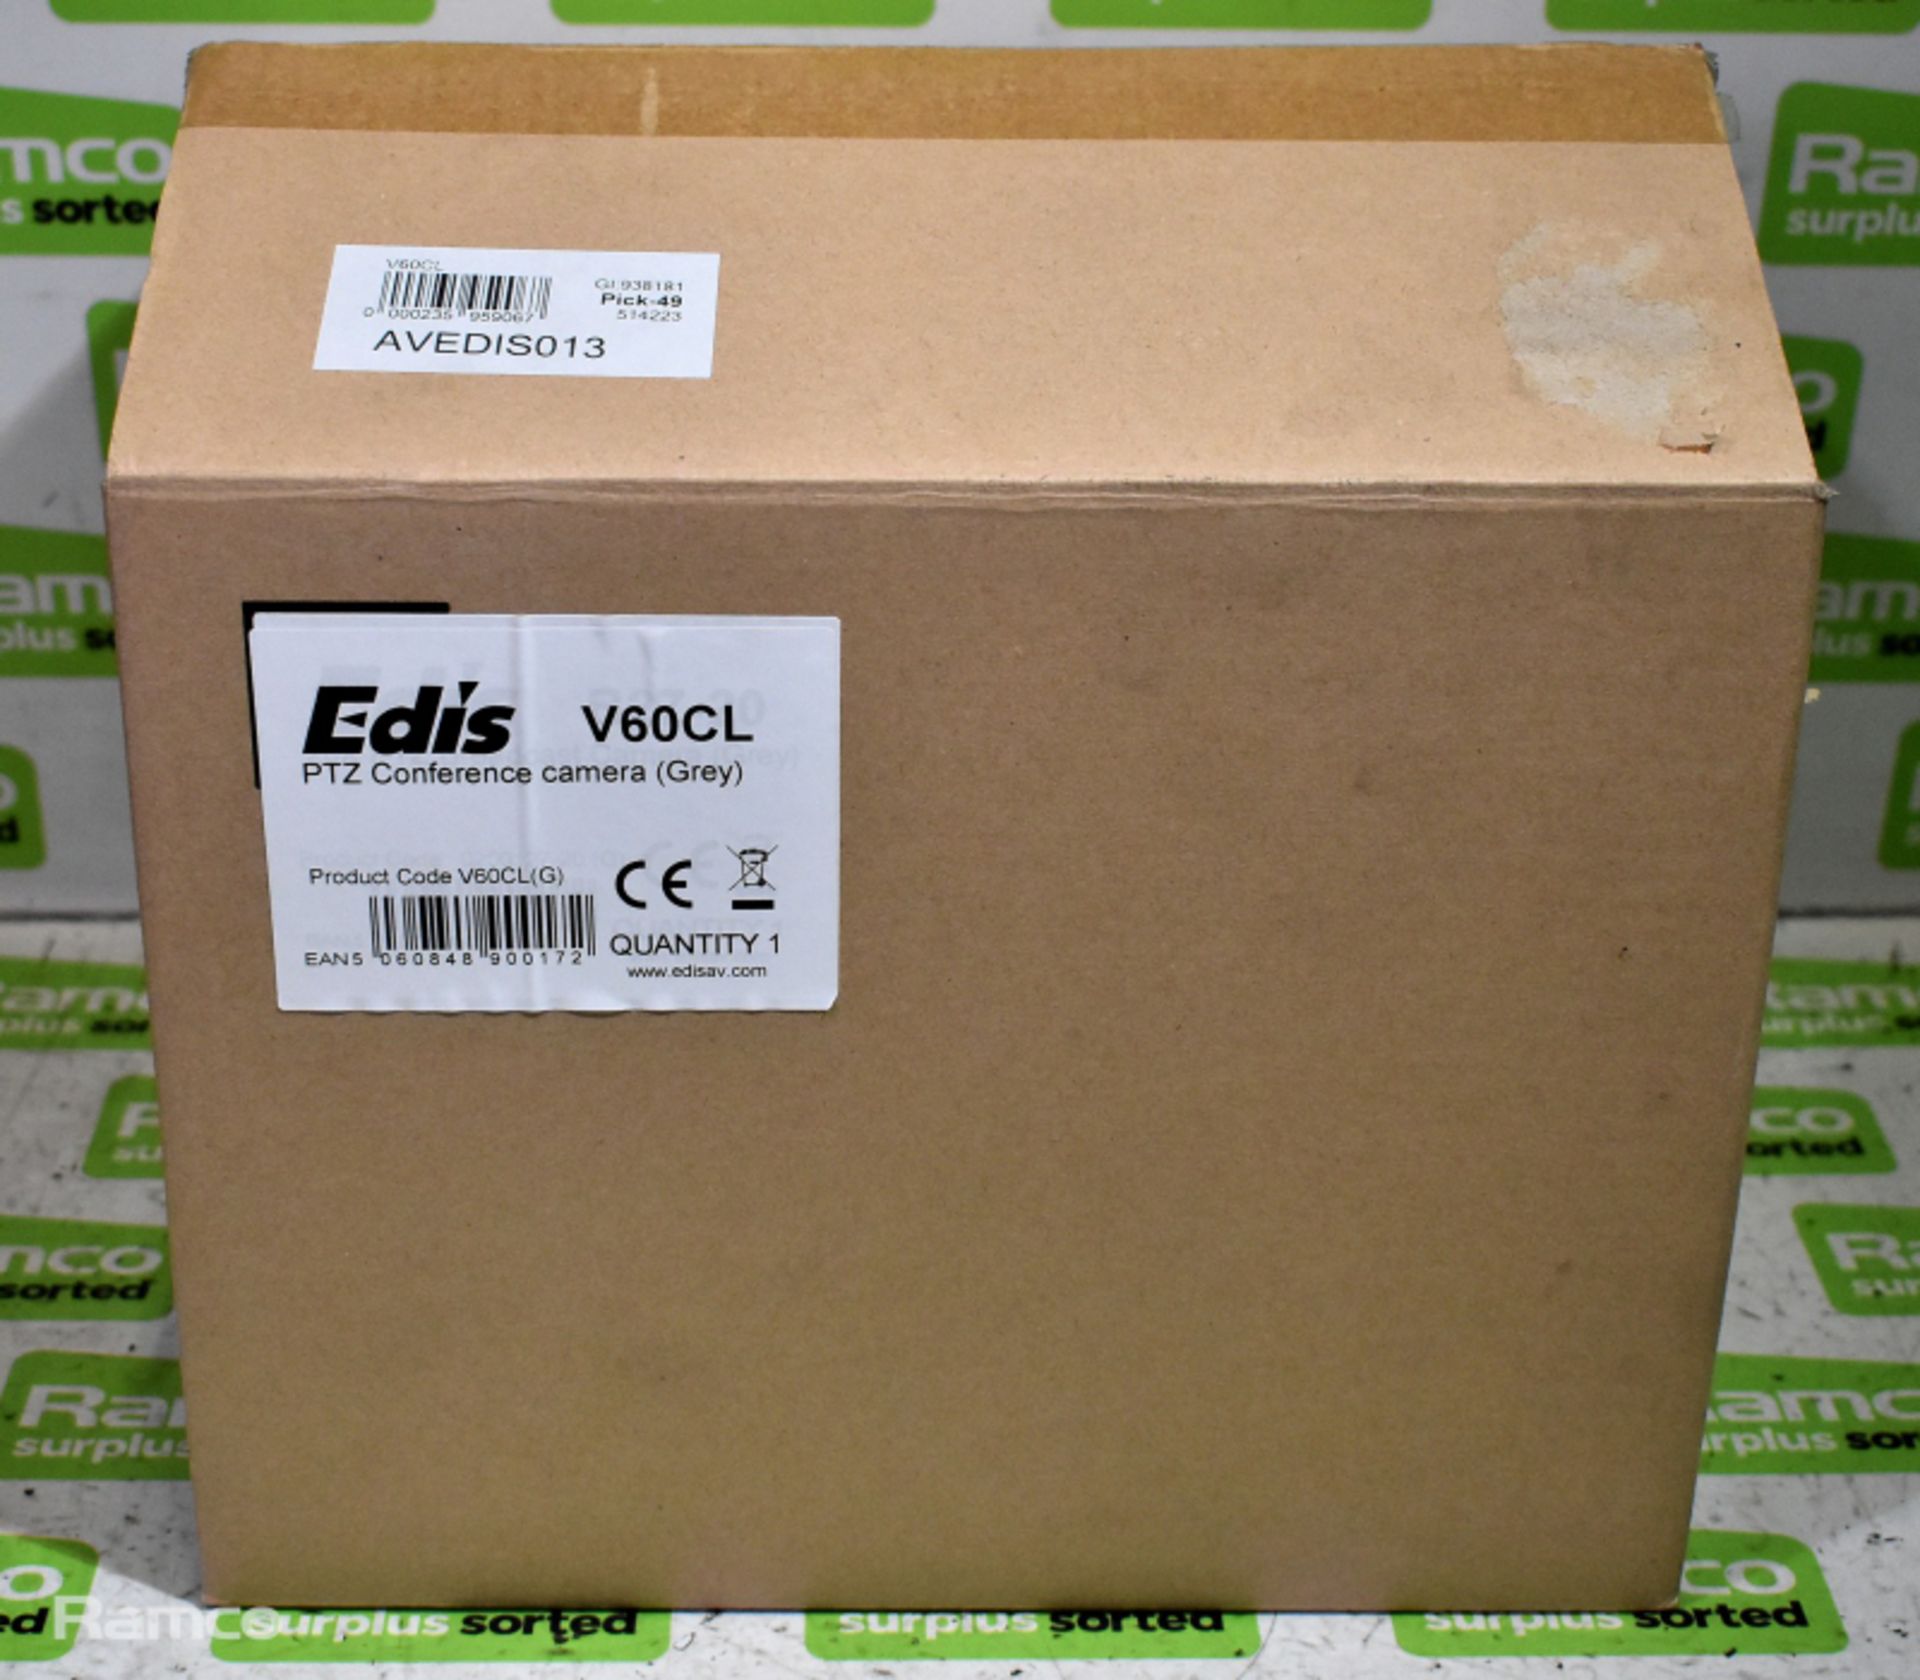 Edis V60CL PTZ conference camera - Image 5 of 5